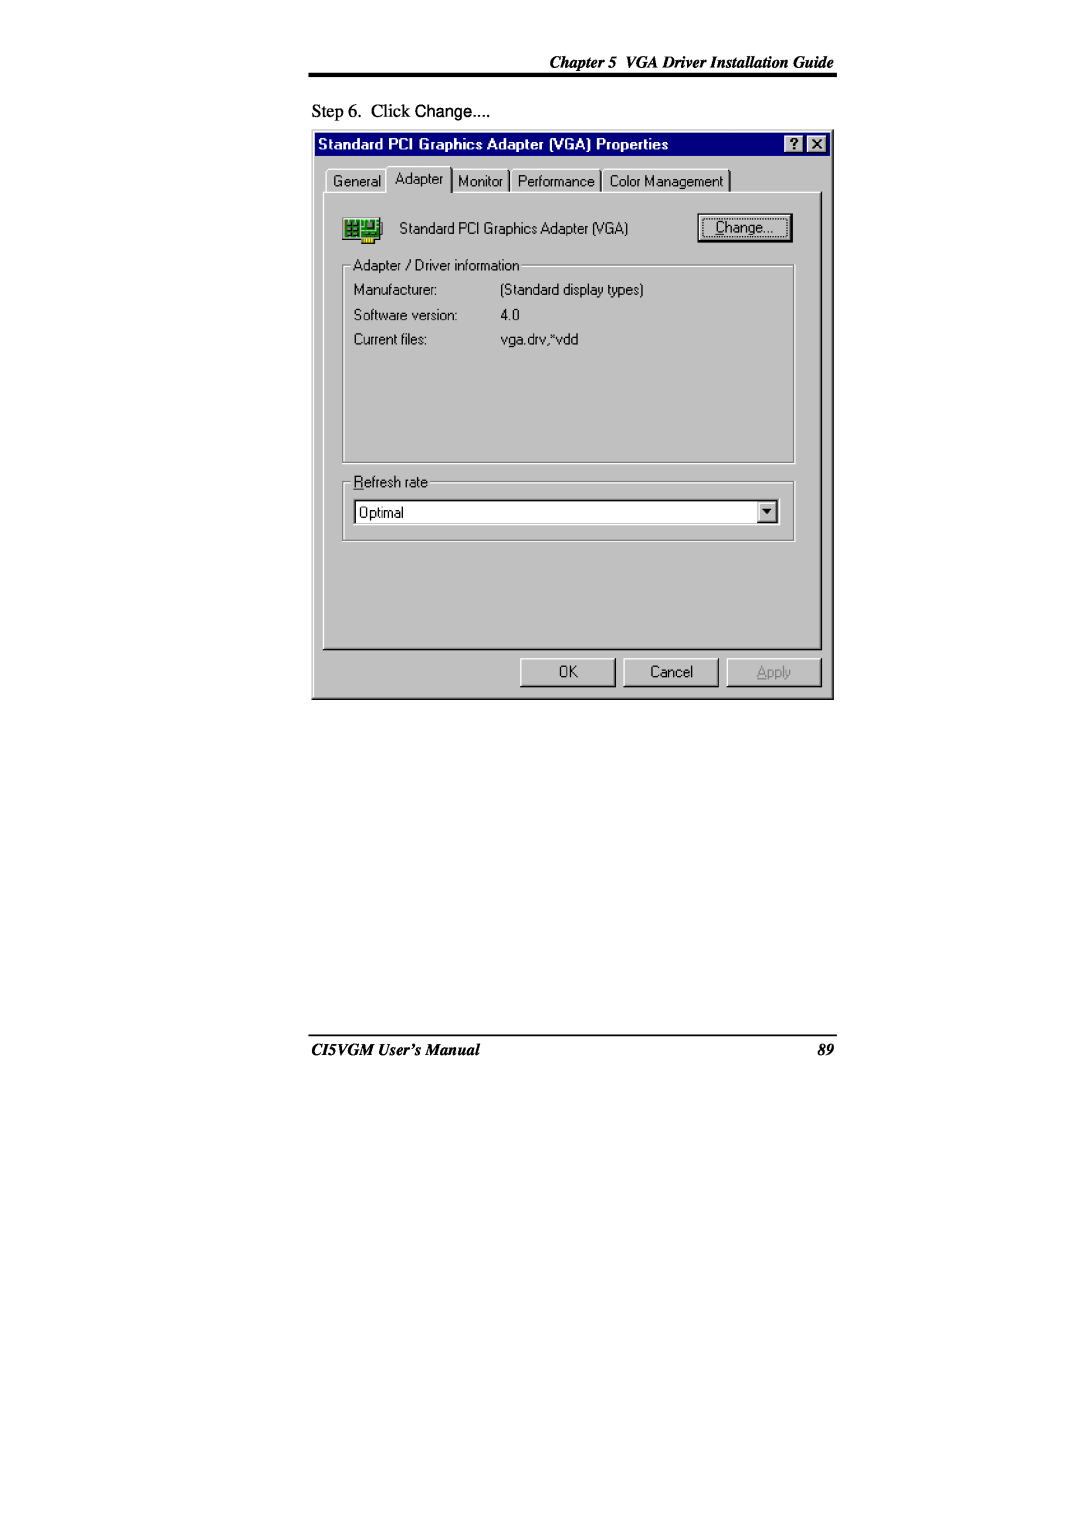 IBM CI5VGM Series user manual Click Change, VGA Driver Installation Guide, CI5VGM User’s Manual 